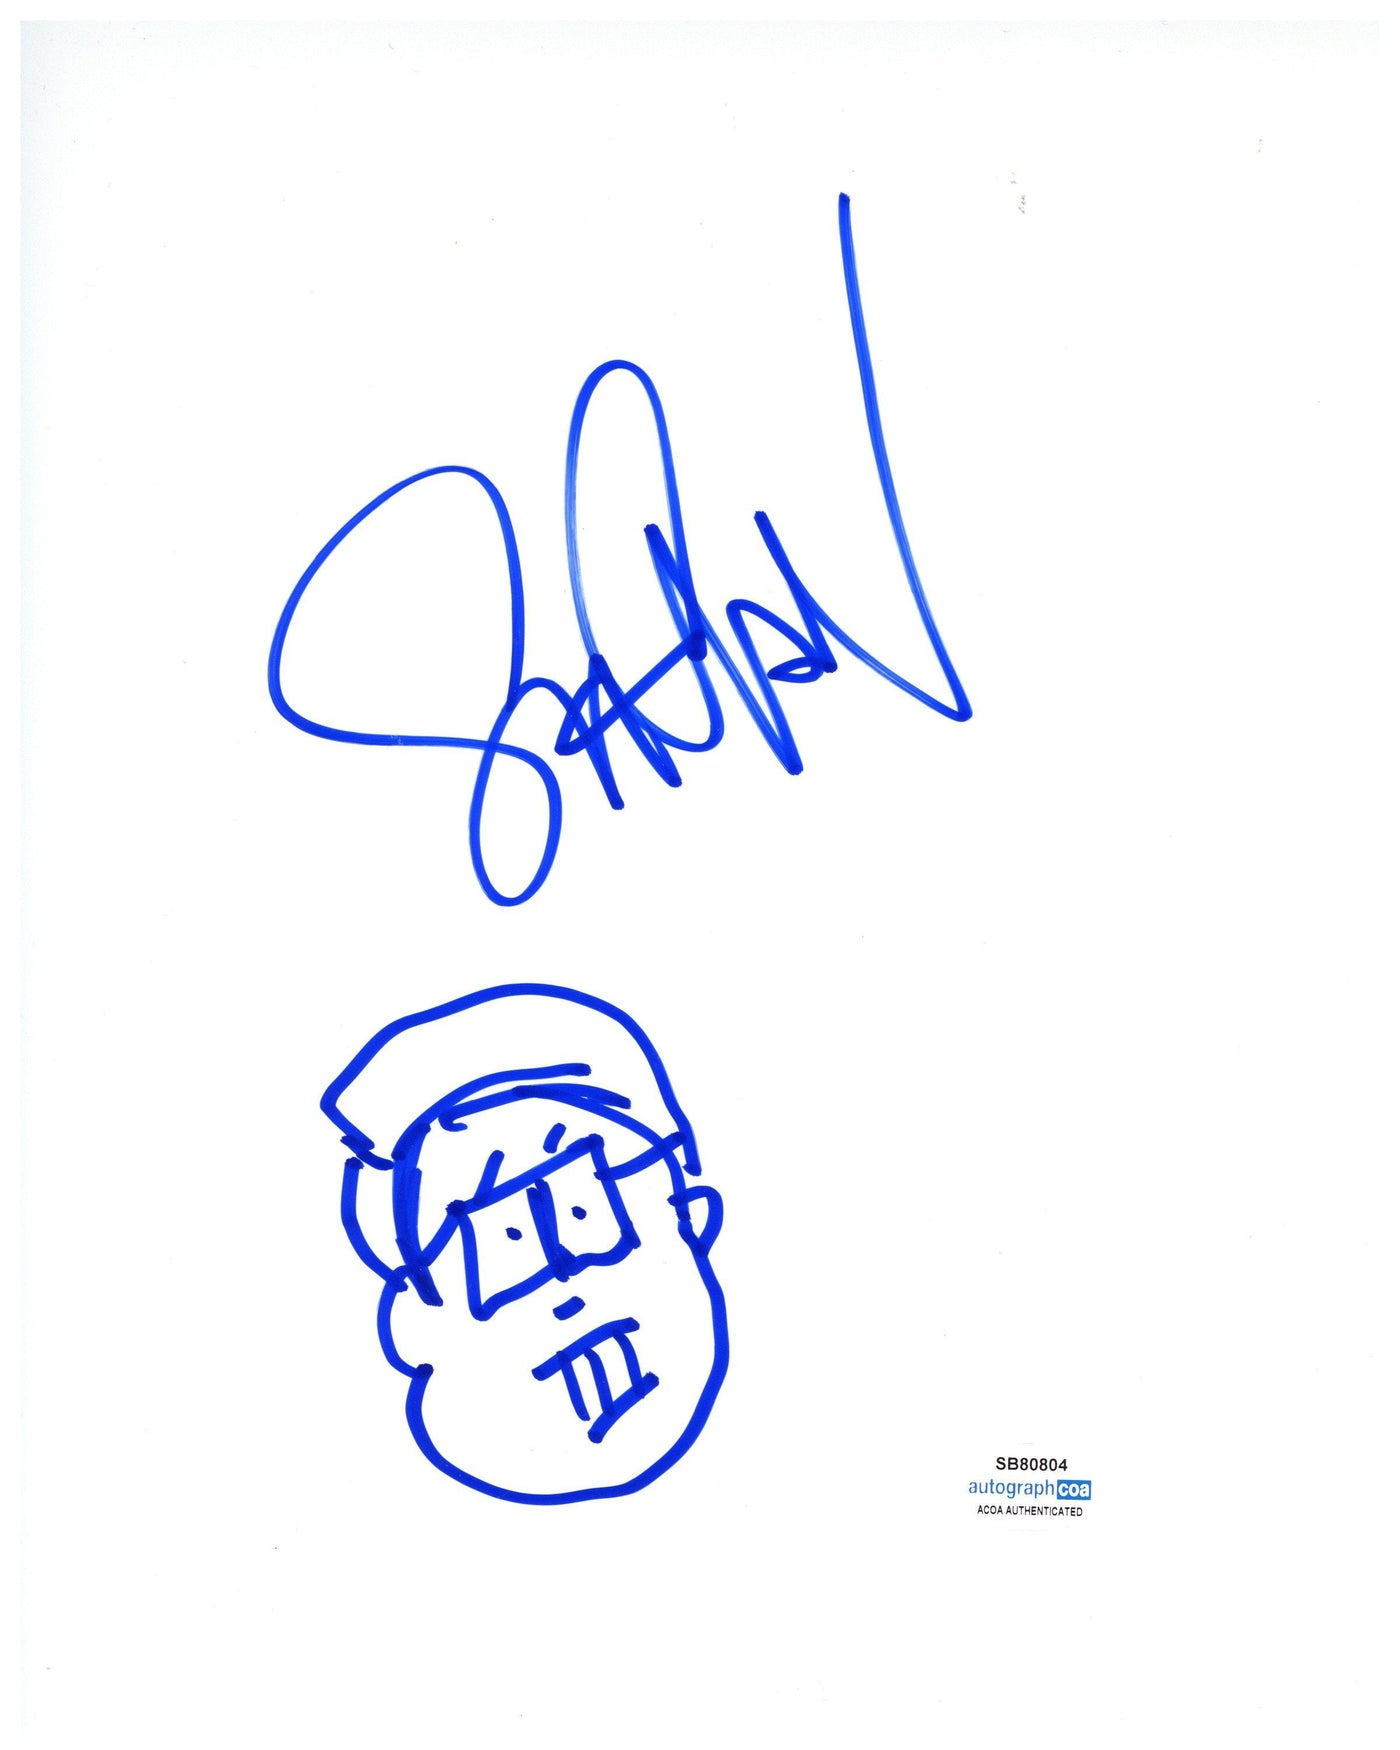 Seth Green Signed Original Drawing - Hand Sketch Autographed AutographCOA